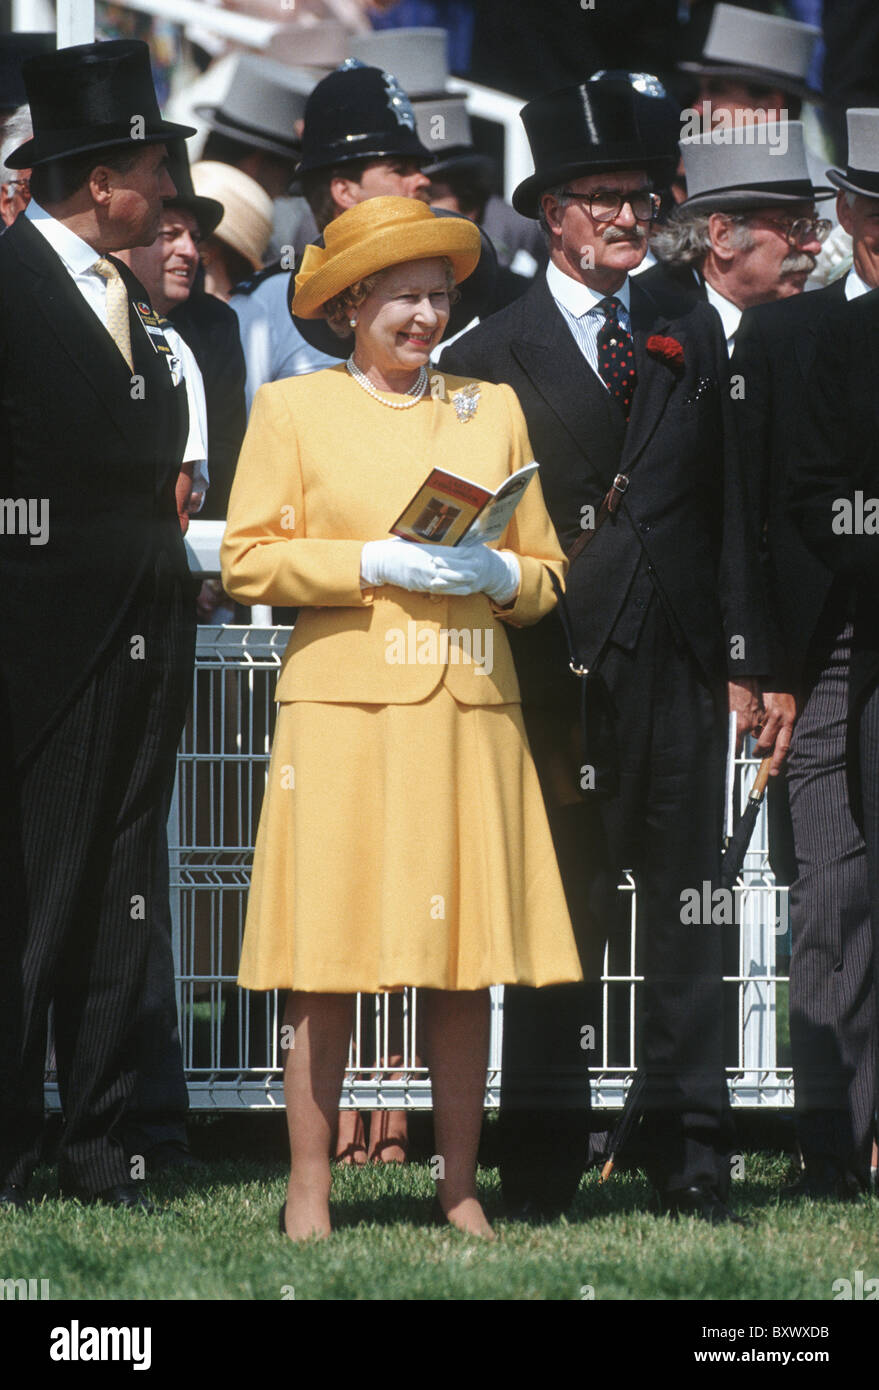 Queen Elizabeth II at the Epsom Derby Races, Britain Stock Photo